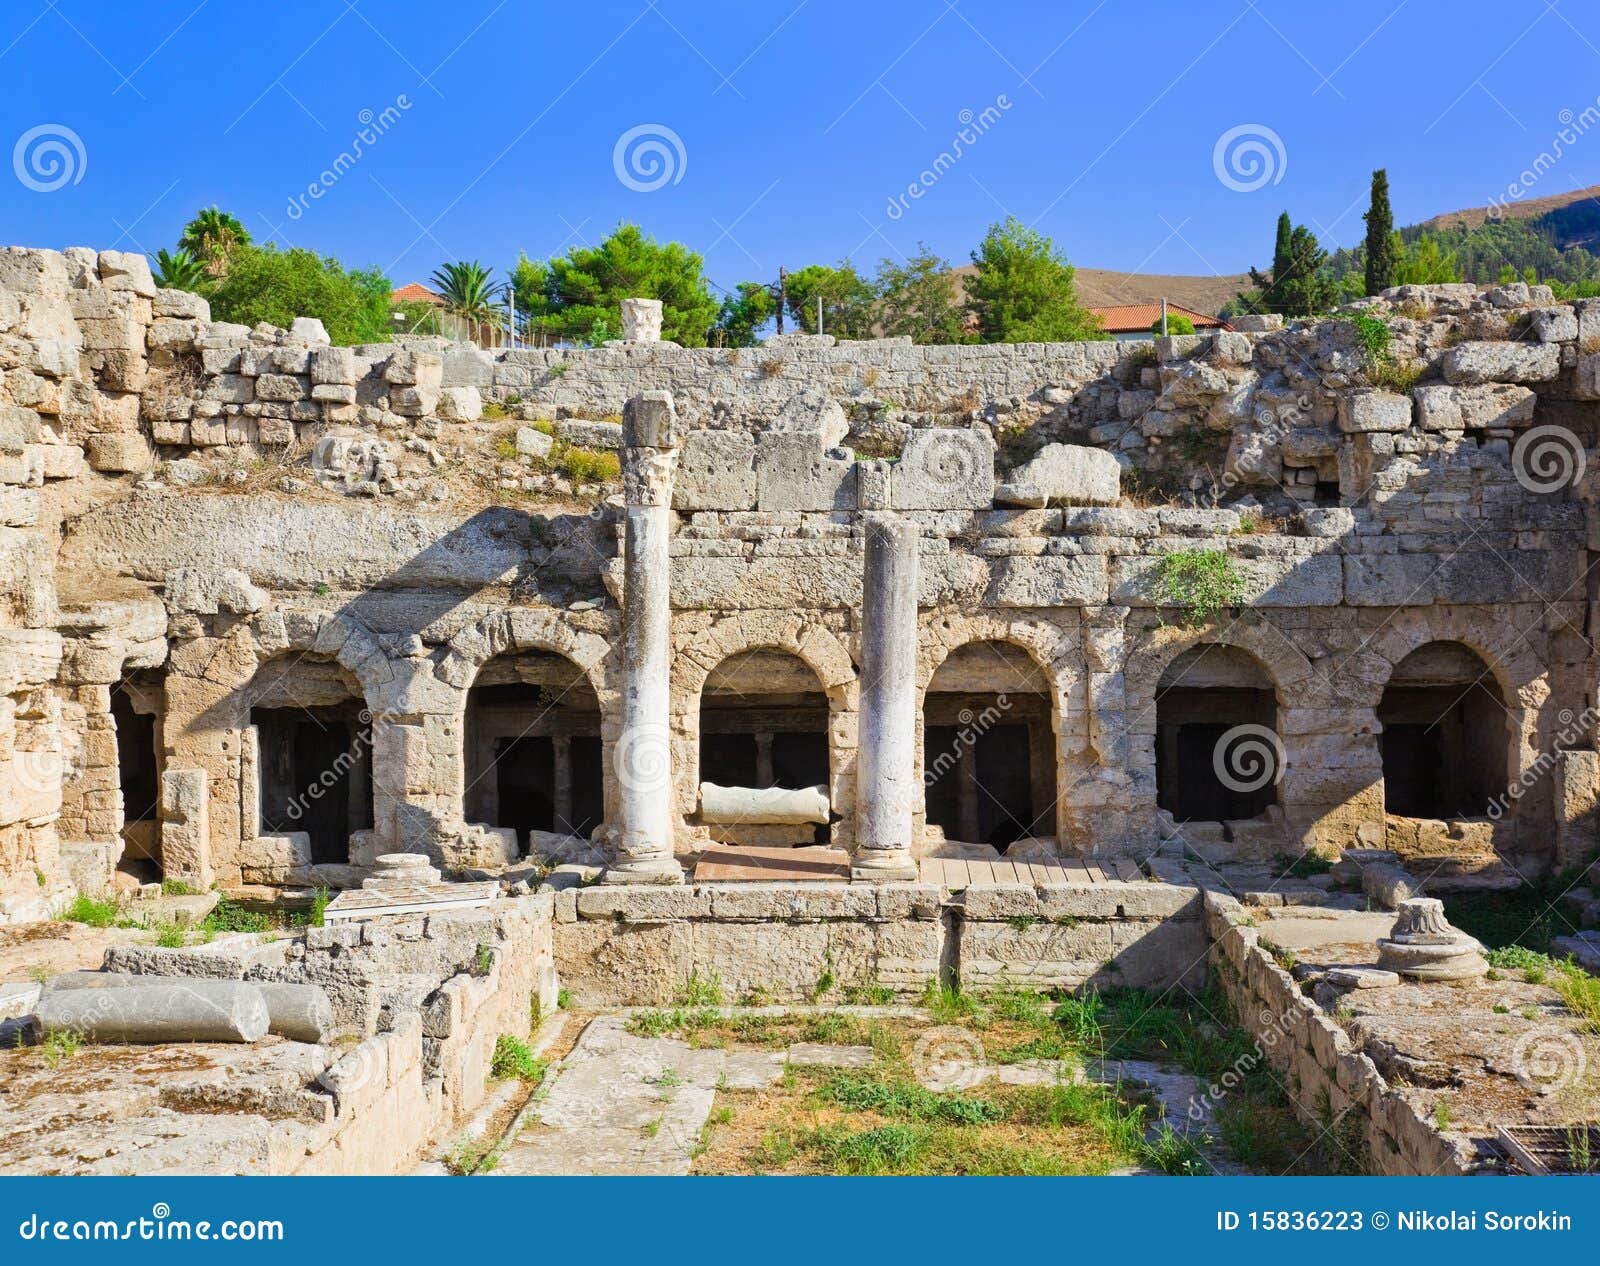 ruins in corinth, greece